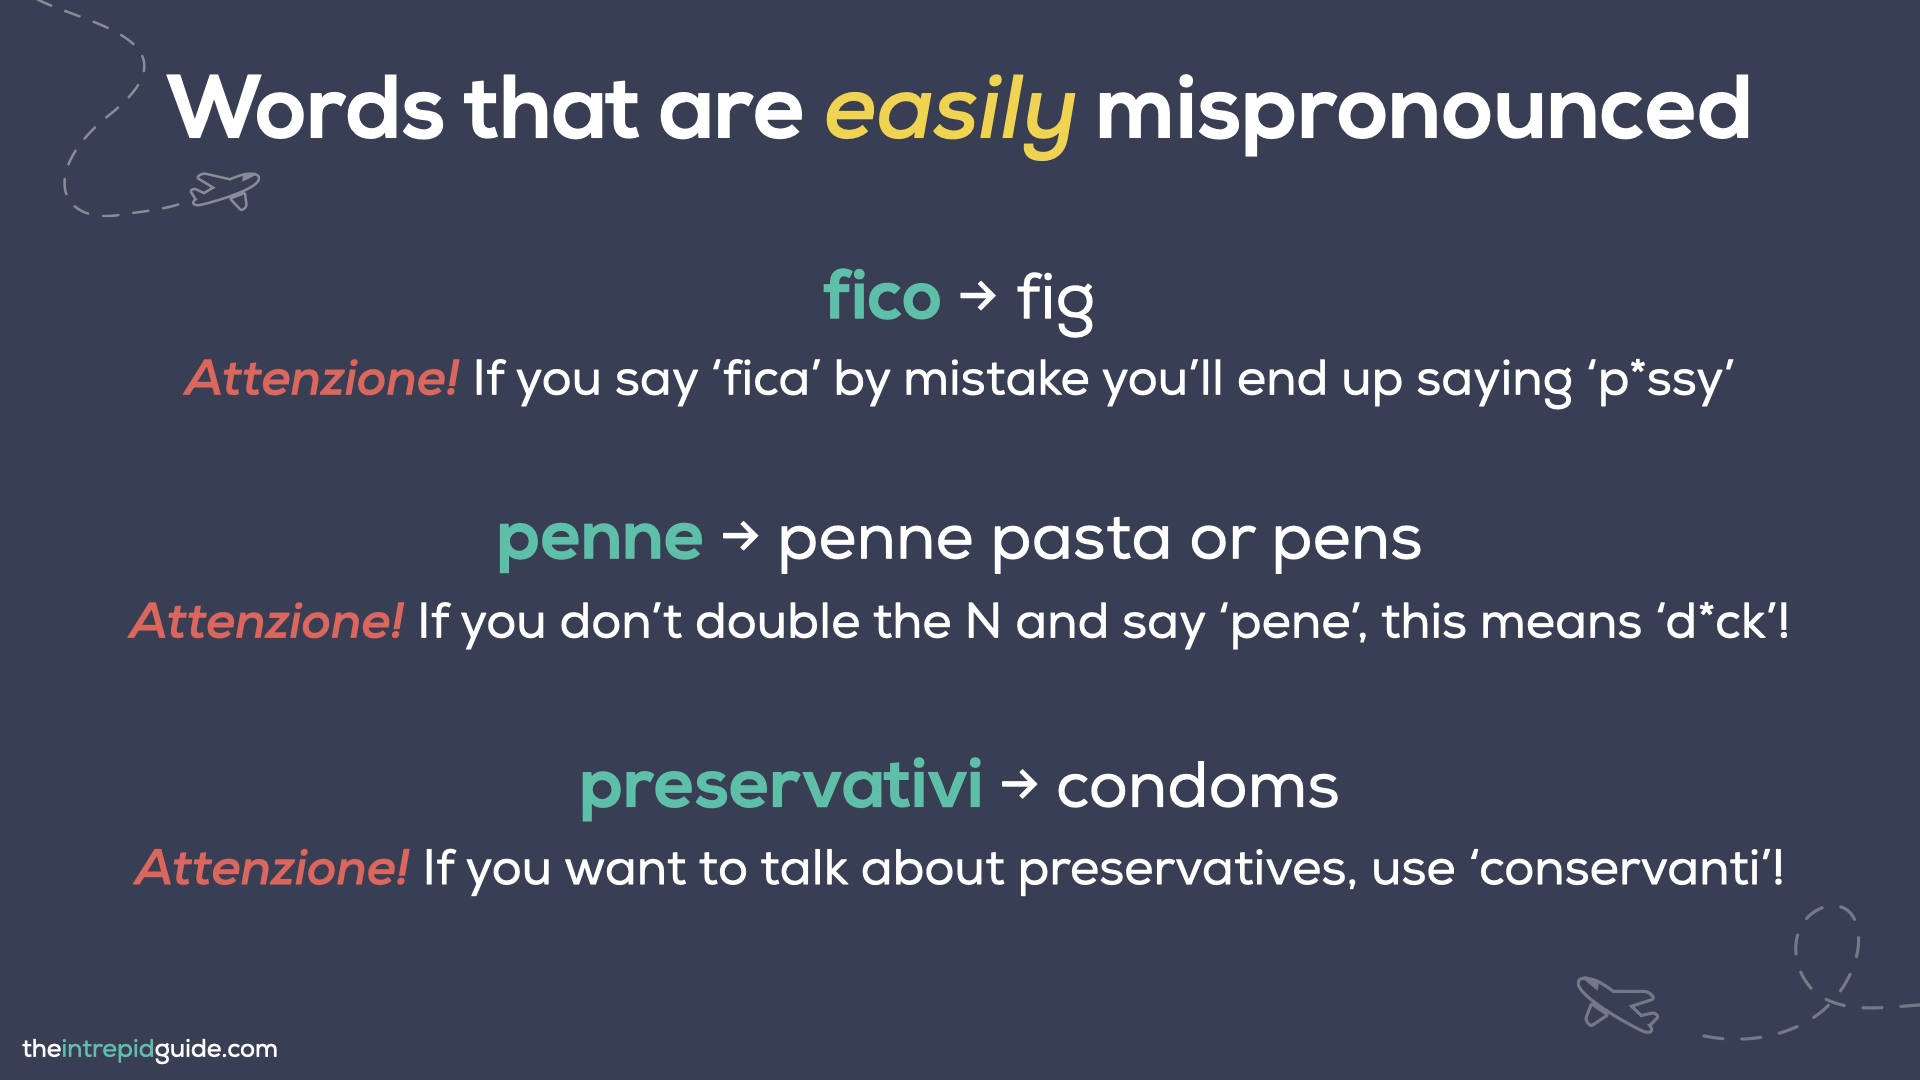 Italian Bad Words - fico, penne, preservativi